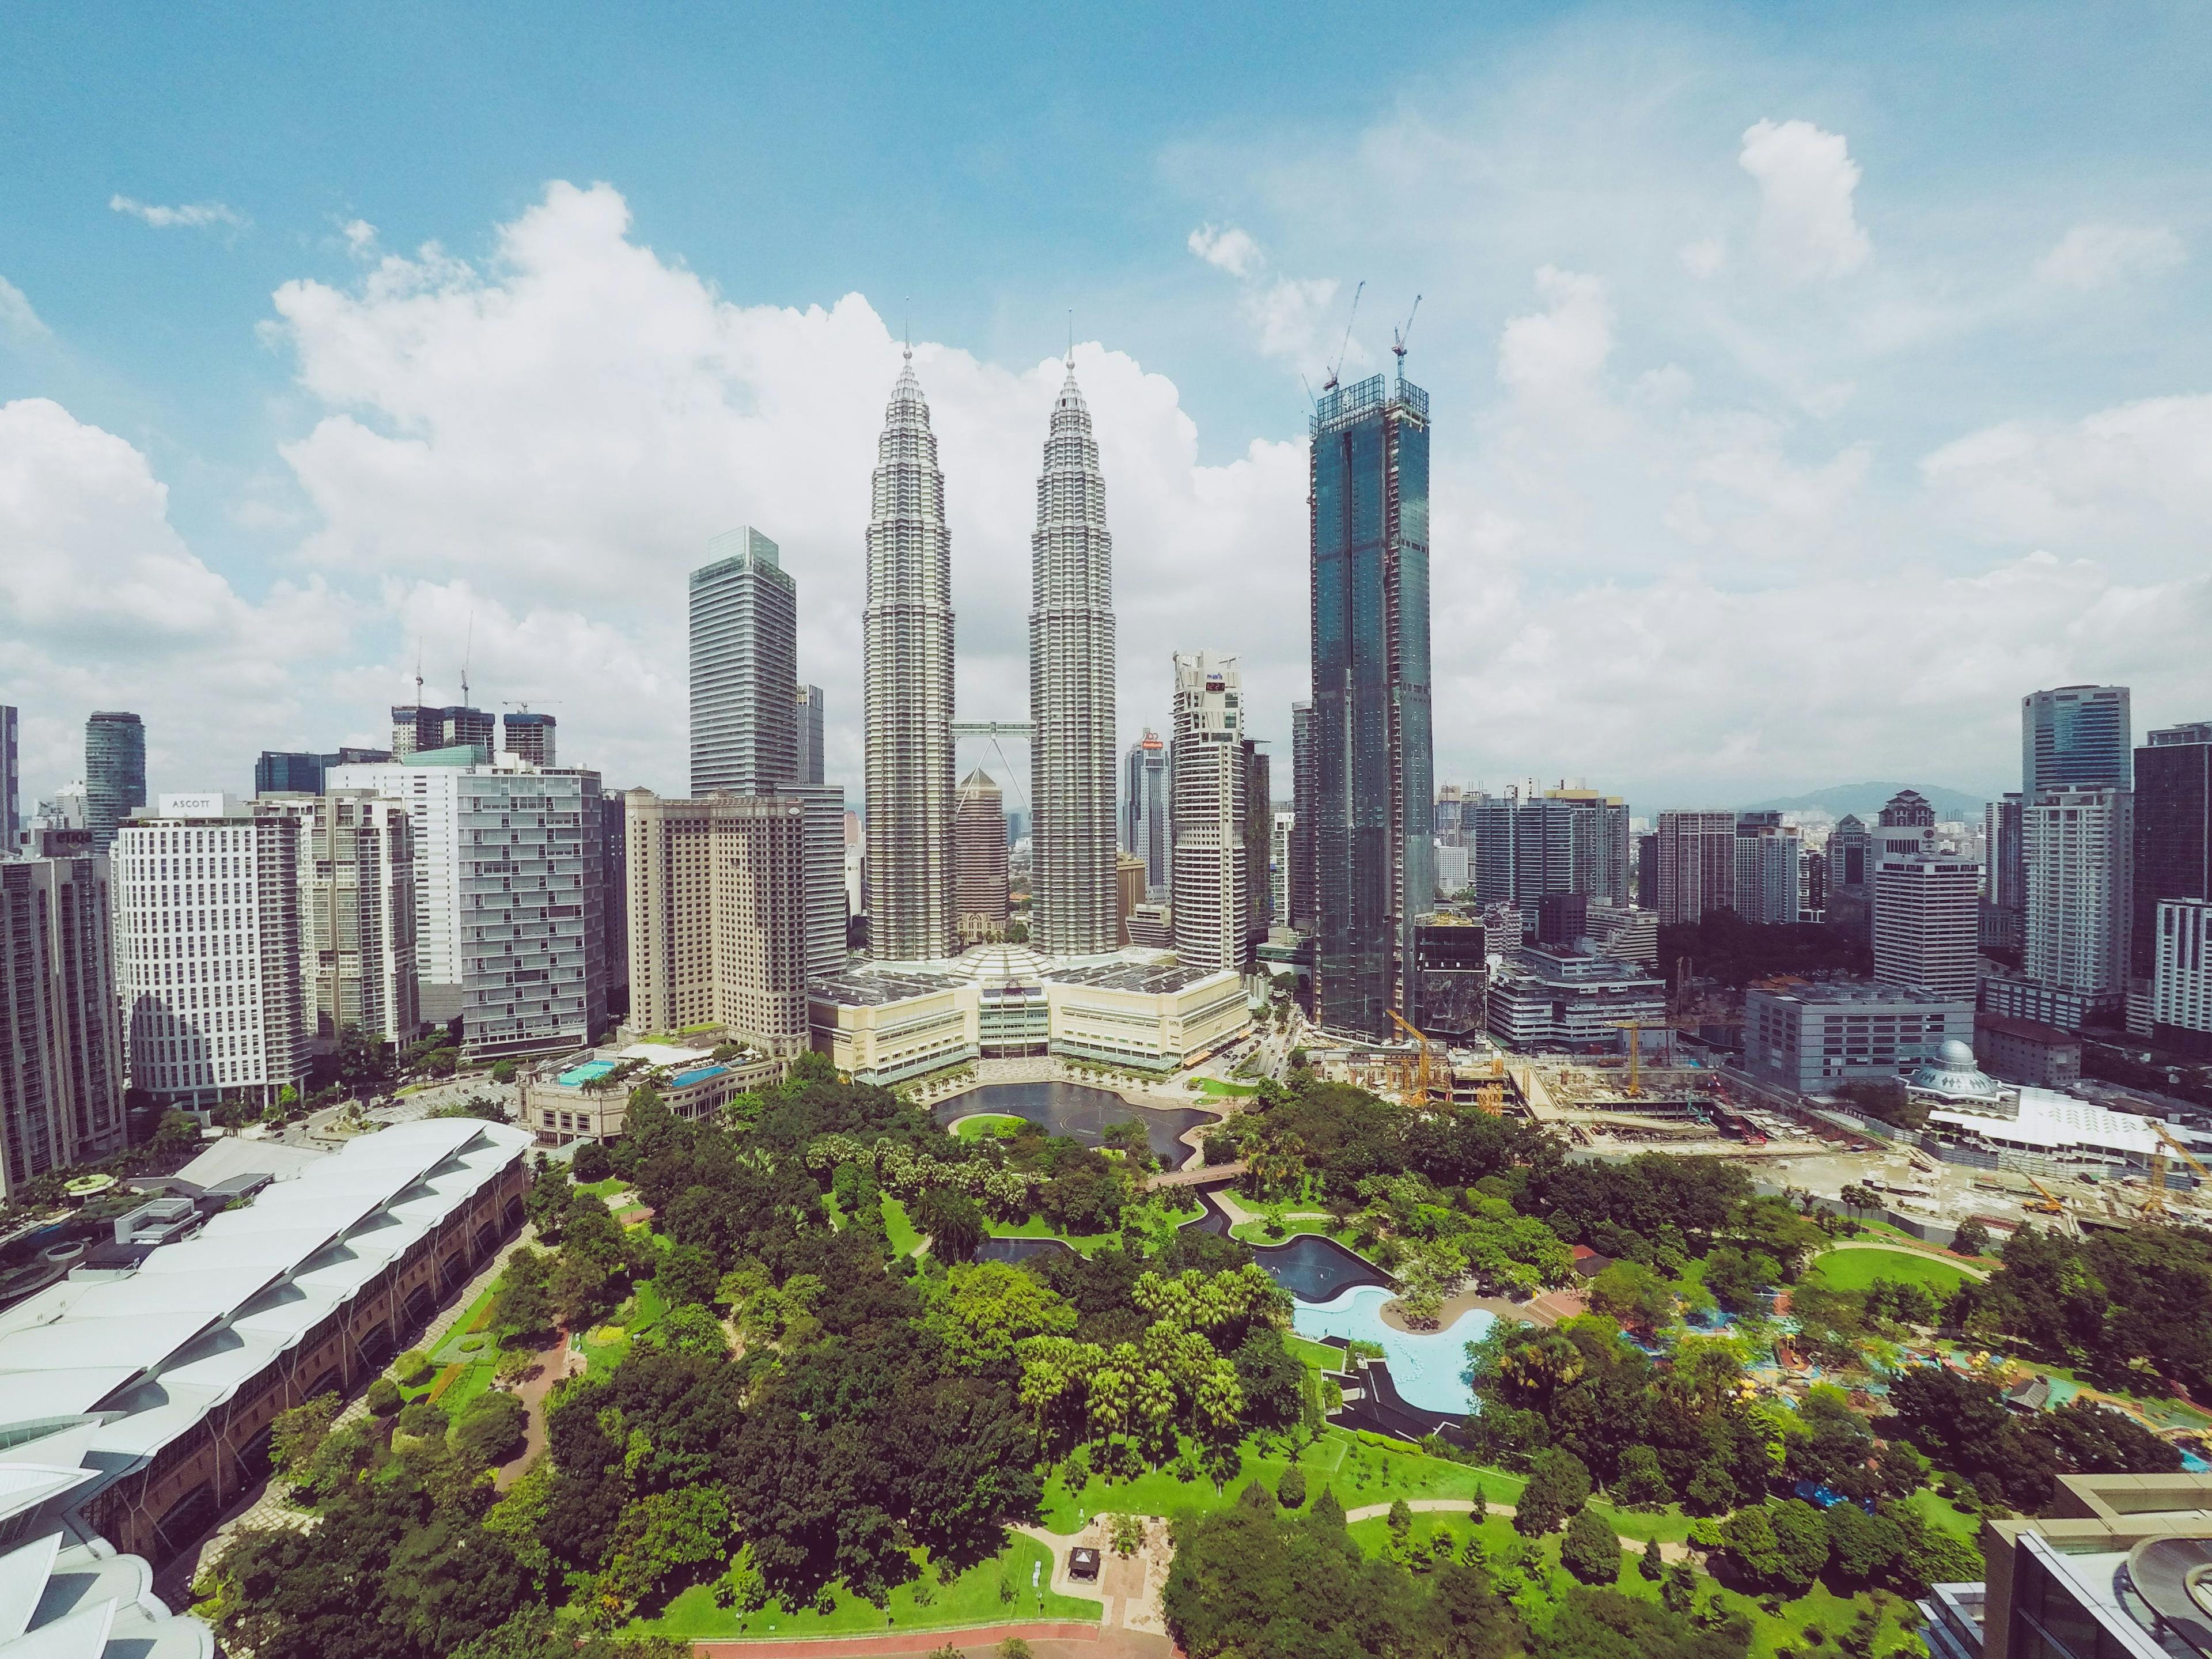 how to extend malaysia tourist visa